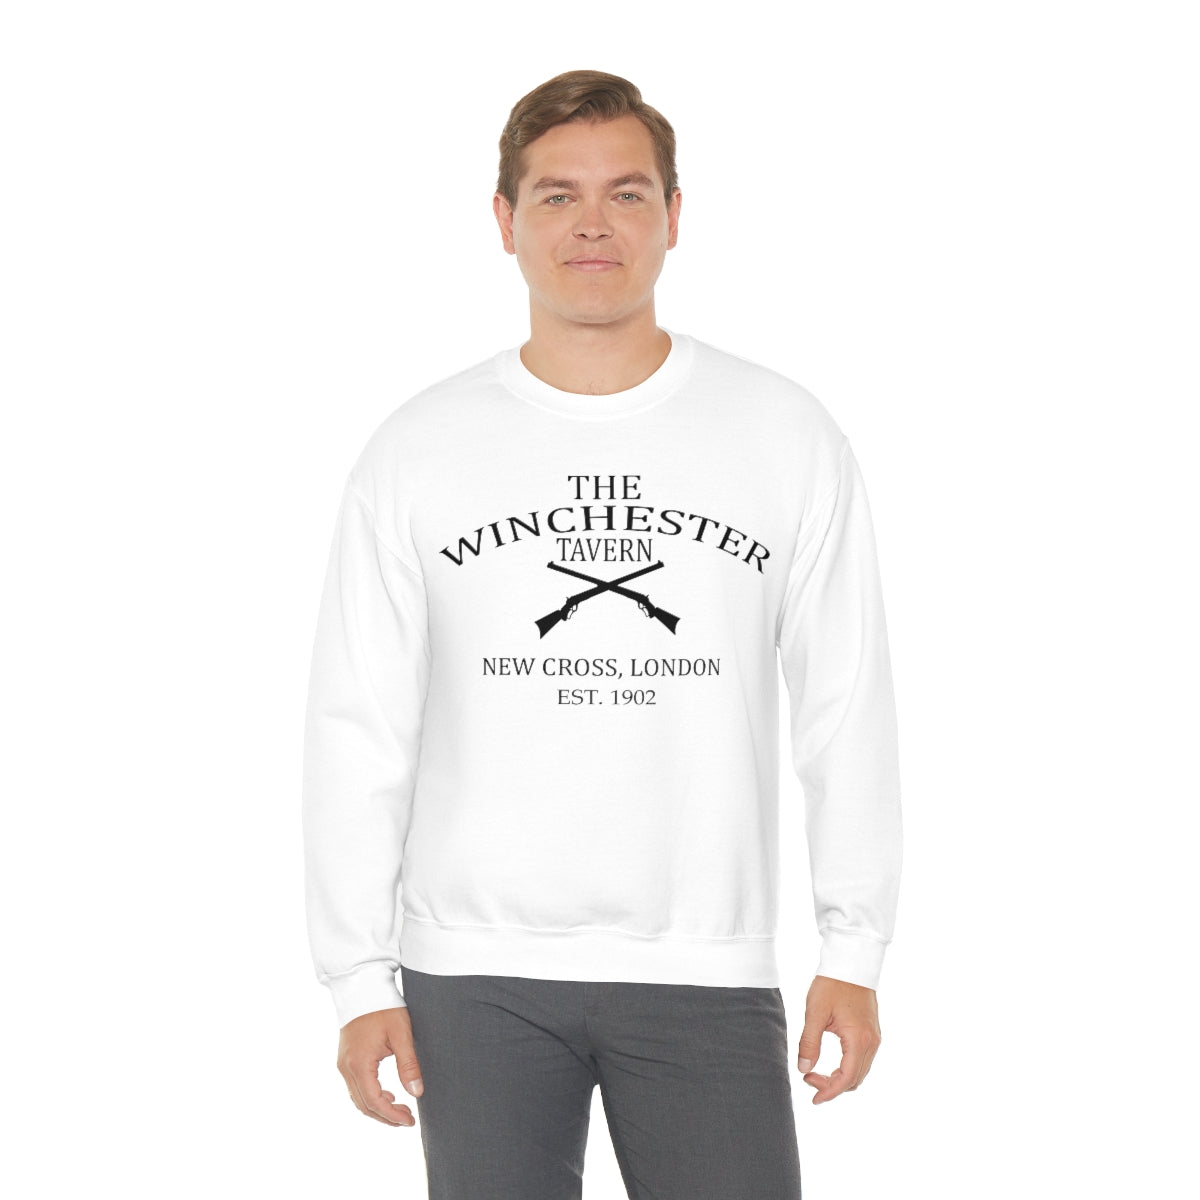 Shaun of the Dead - Winchester Tavern Sweatshirt